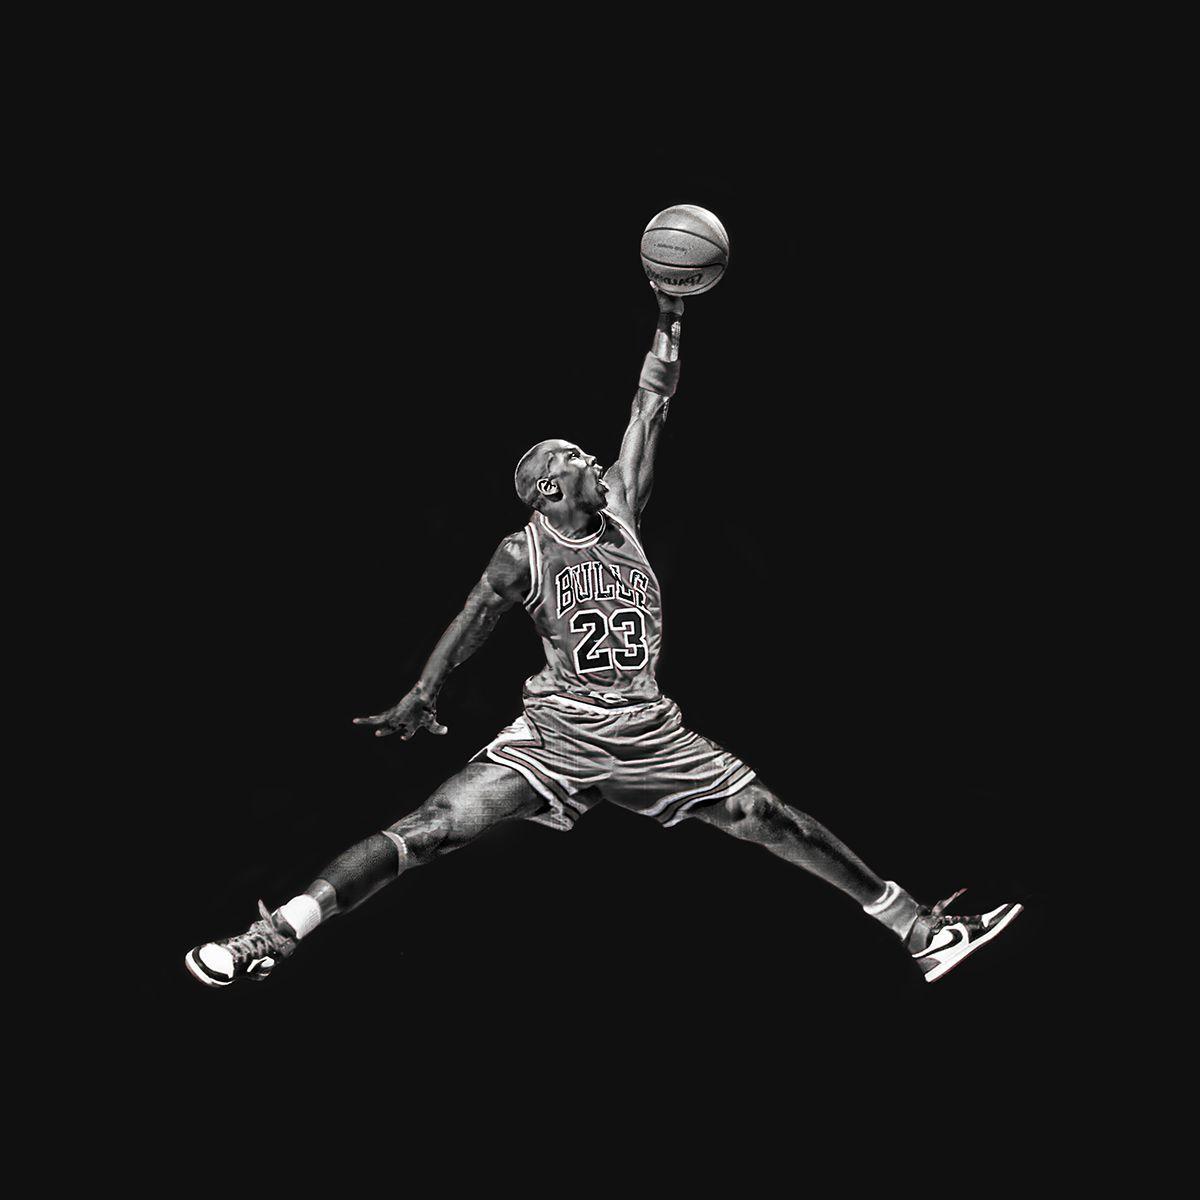 Real Jordan Logo - Jumpman Logo in Real Life on Behance | Sports Design | Pinterest ...